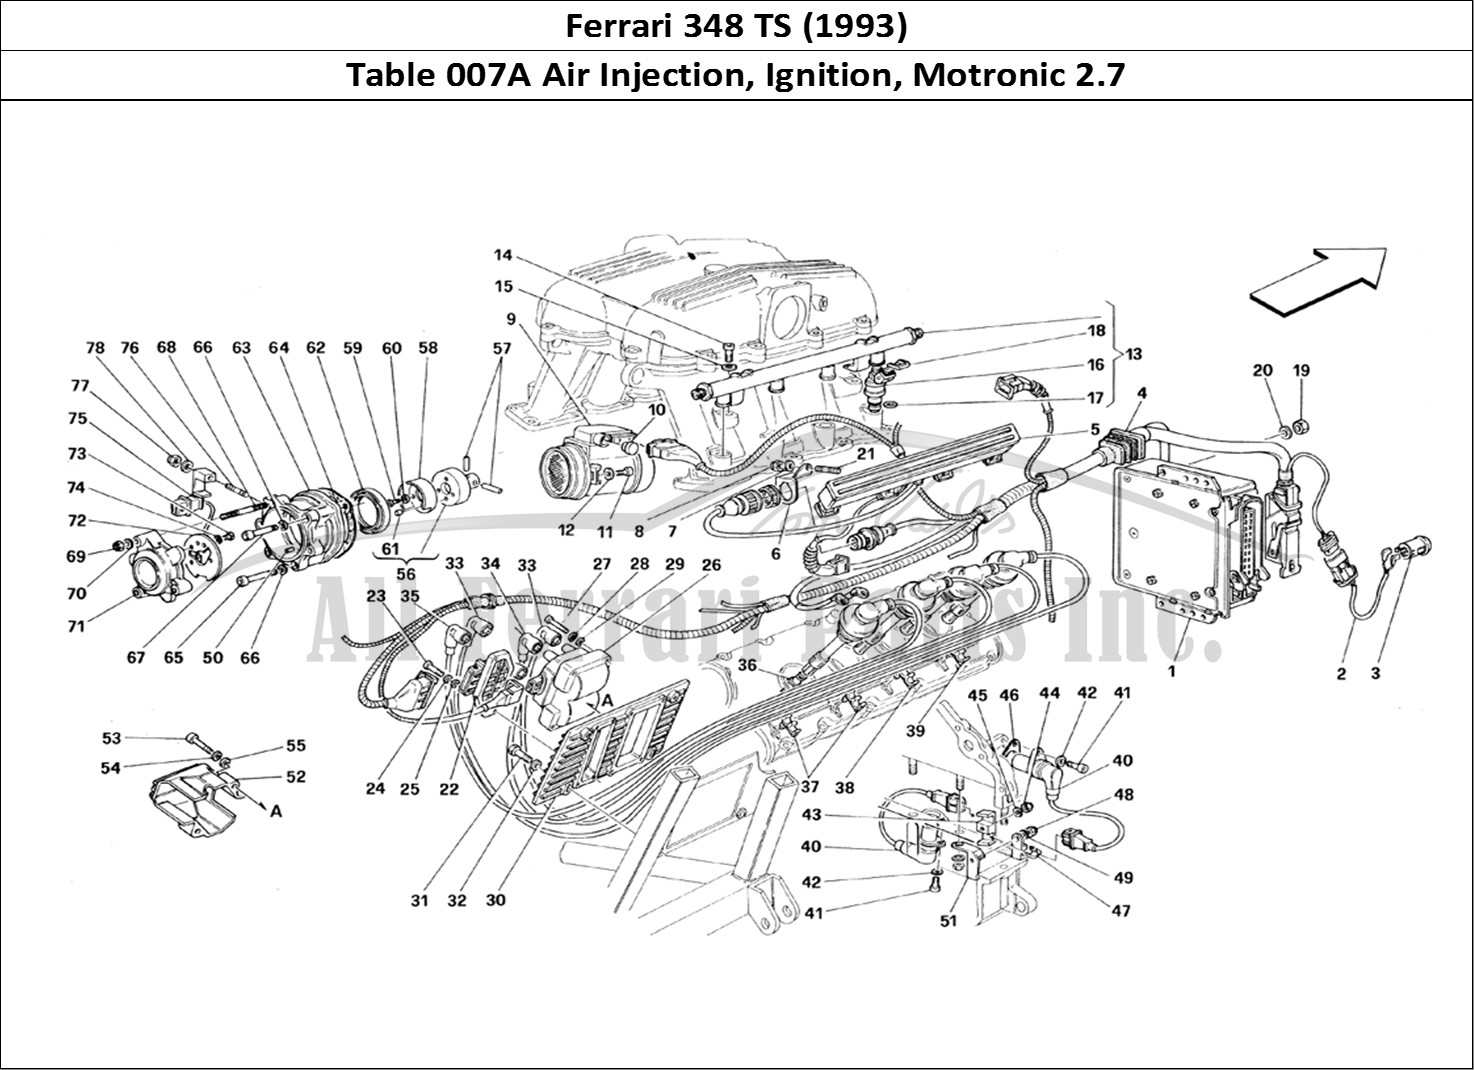 Ferrari Parts Ferrari 348 TB (1993) Page 007 Air Injection - Ignition